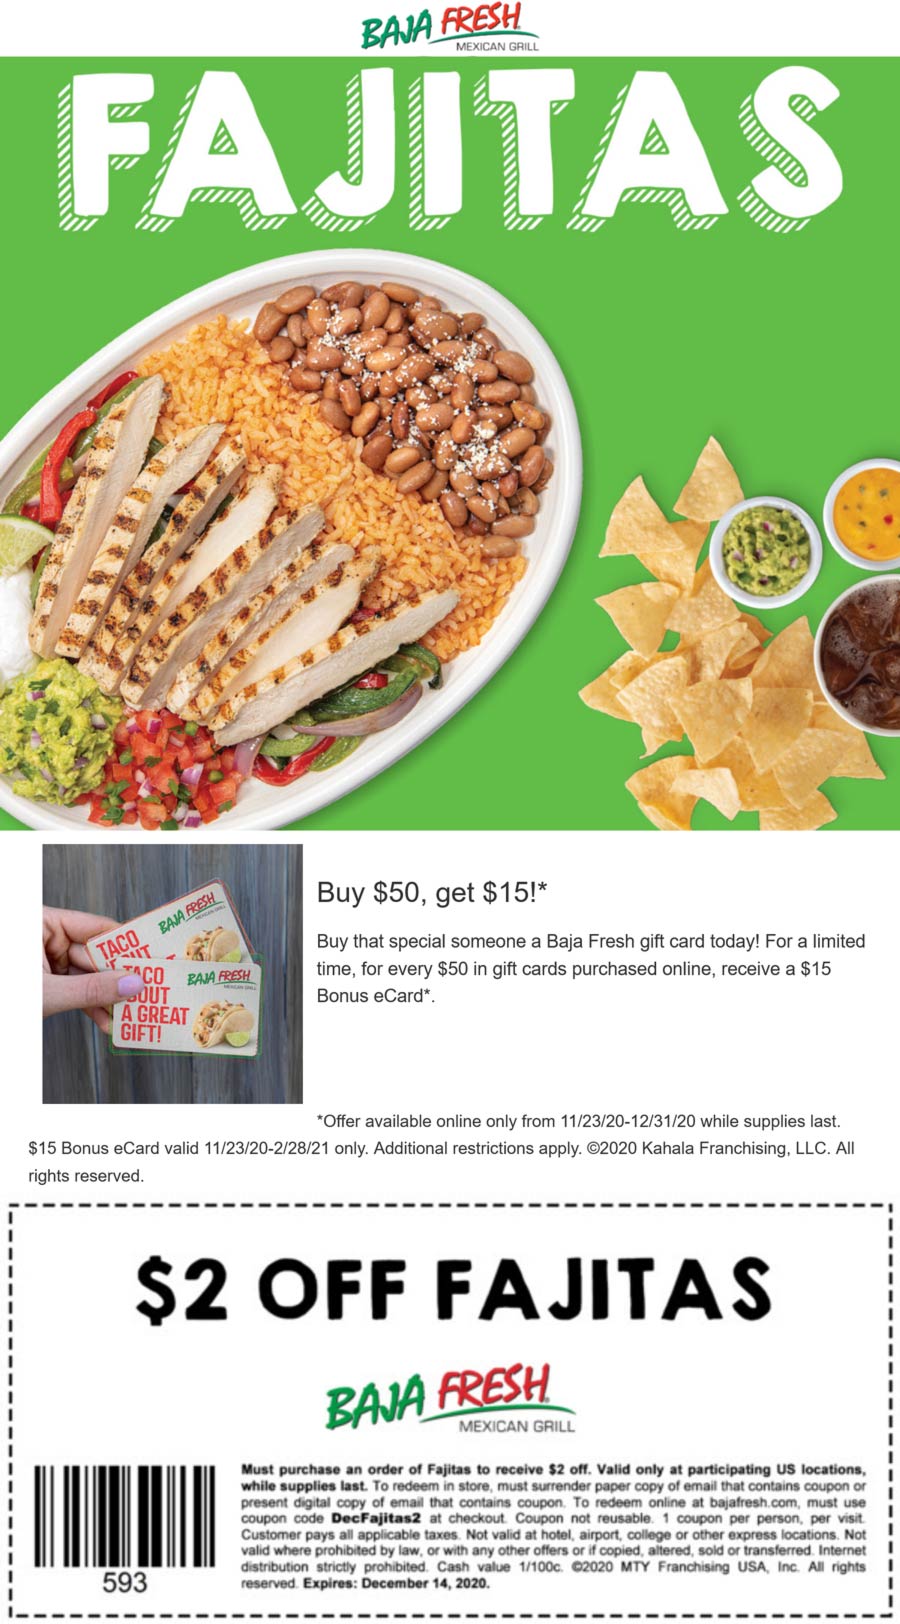 Baja Fresh restaurants Coupon  $2 off fajitas at Baja Fresh Mexican grill via promo code DecFajitas2 #bajafresh 